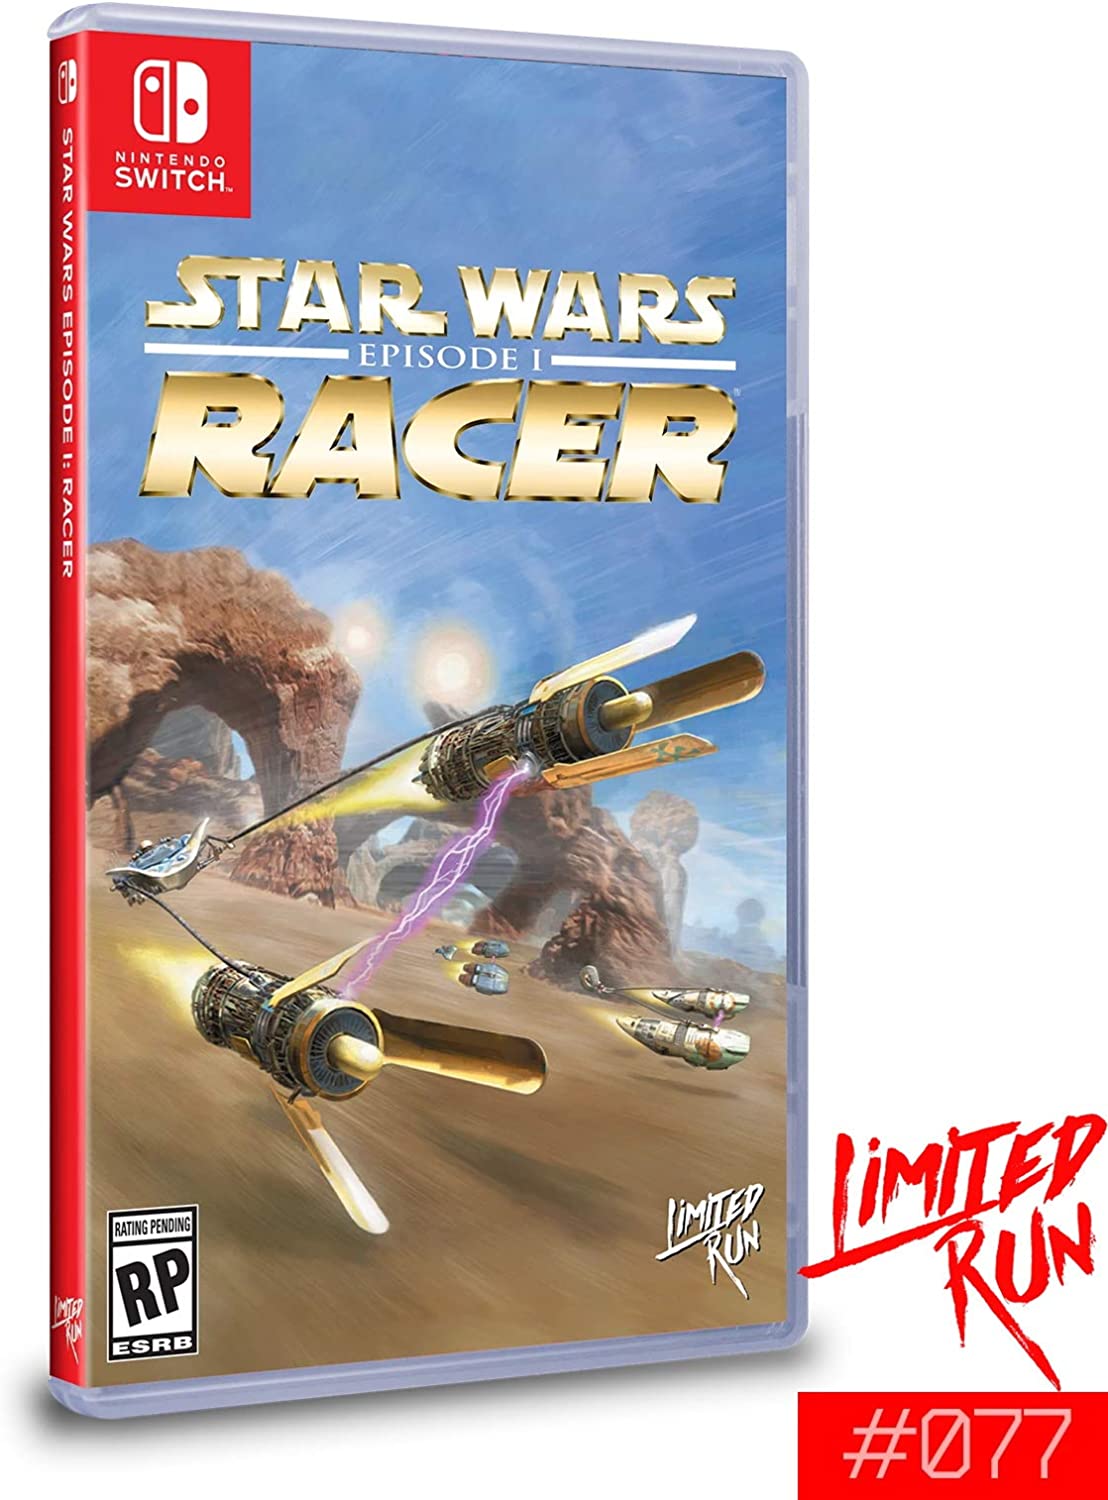 Star Wars Episode 1 Racer (Limited Run) (Switch), Aspyr